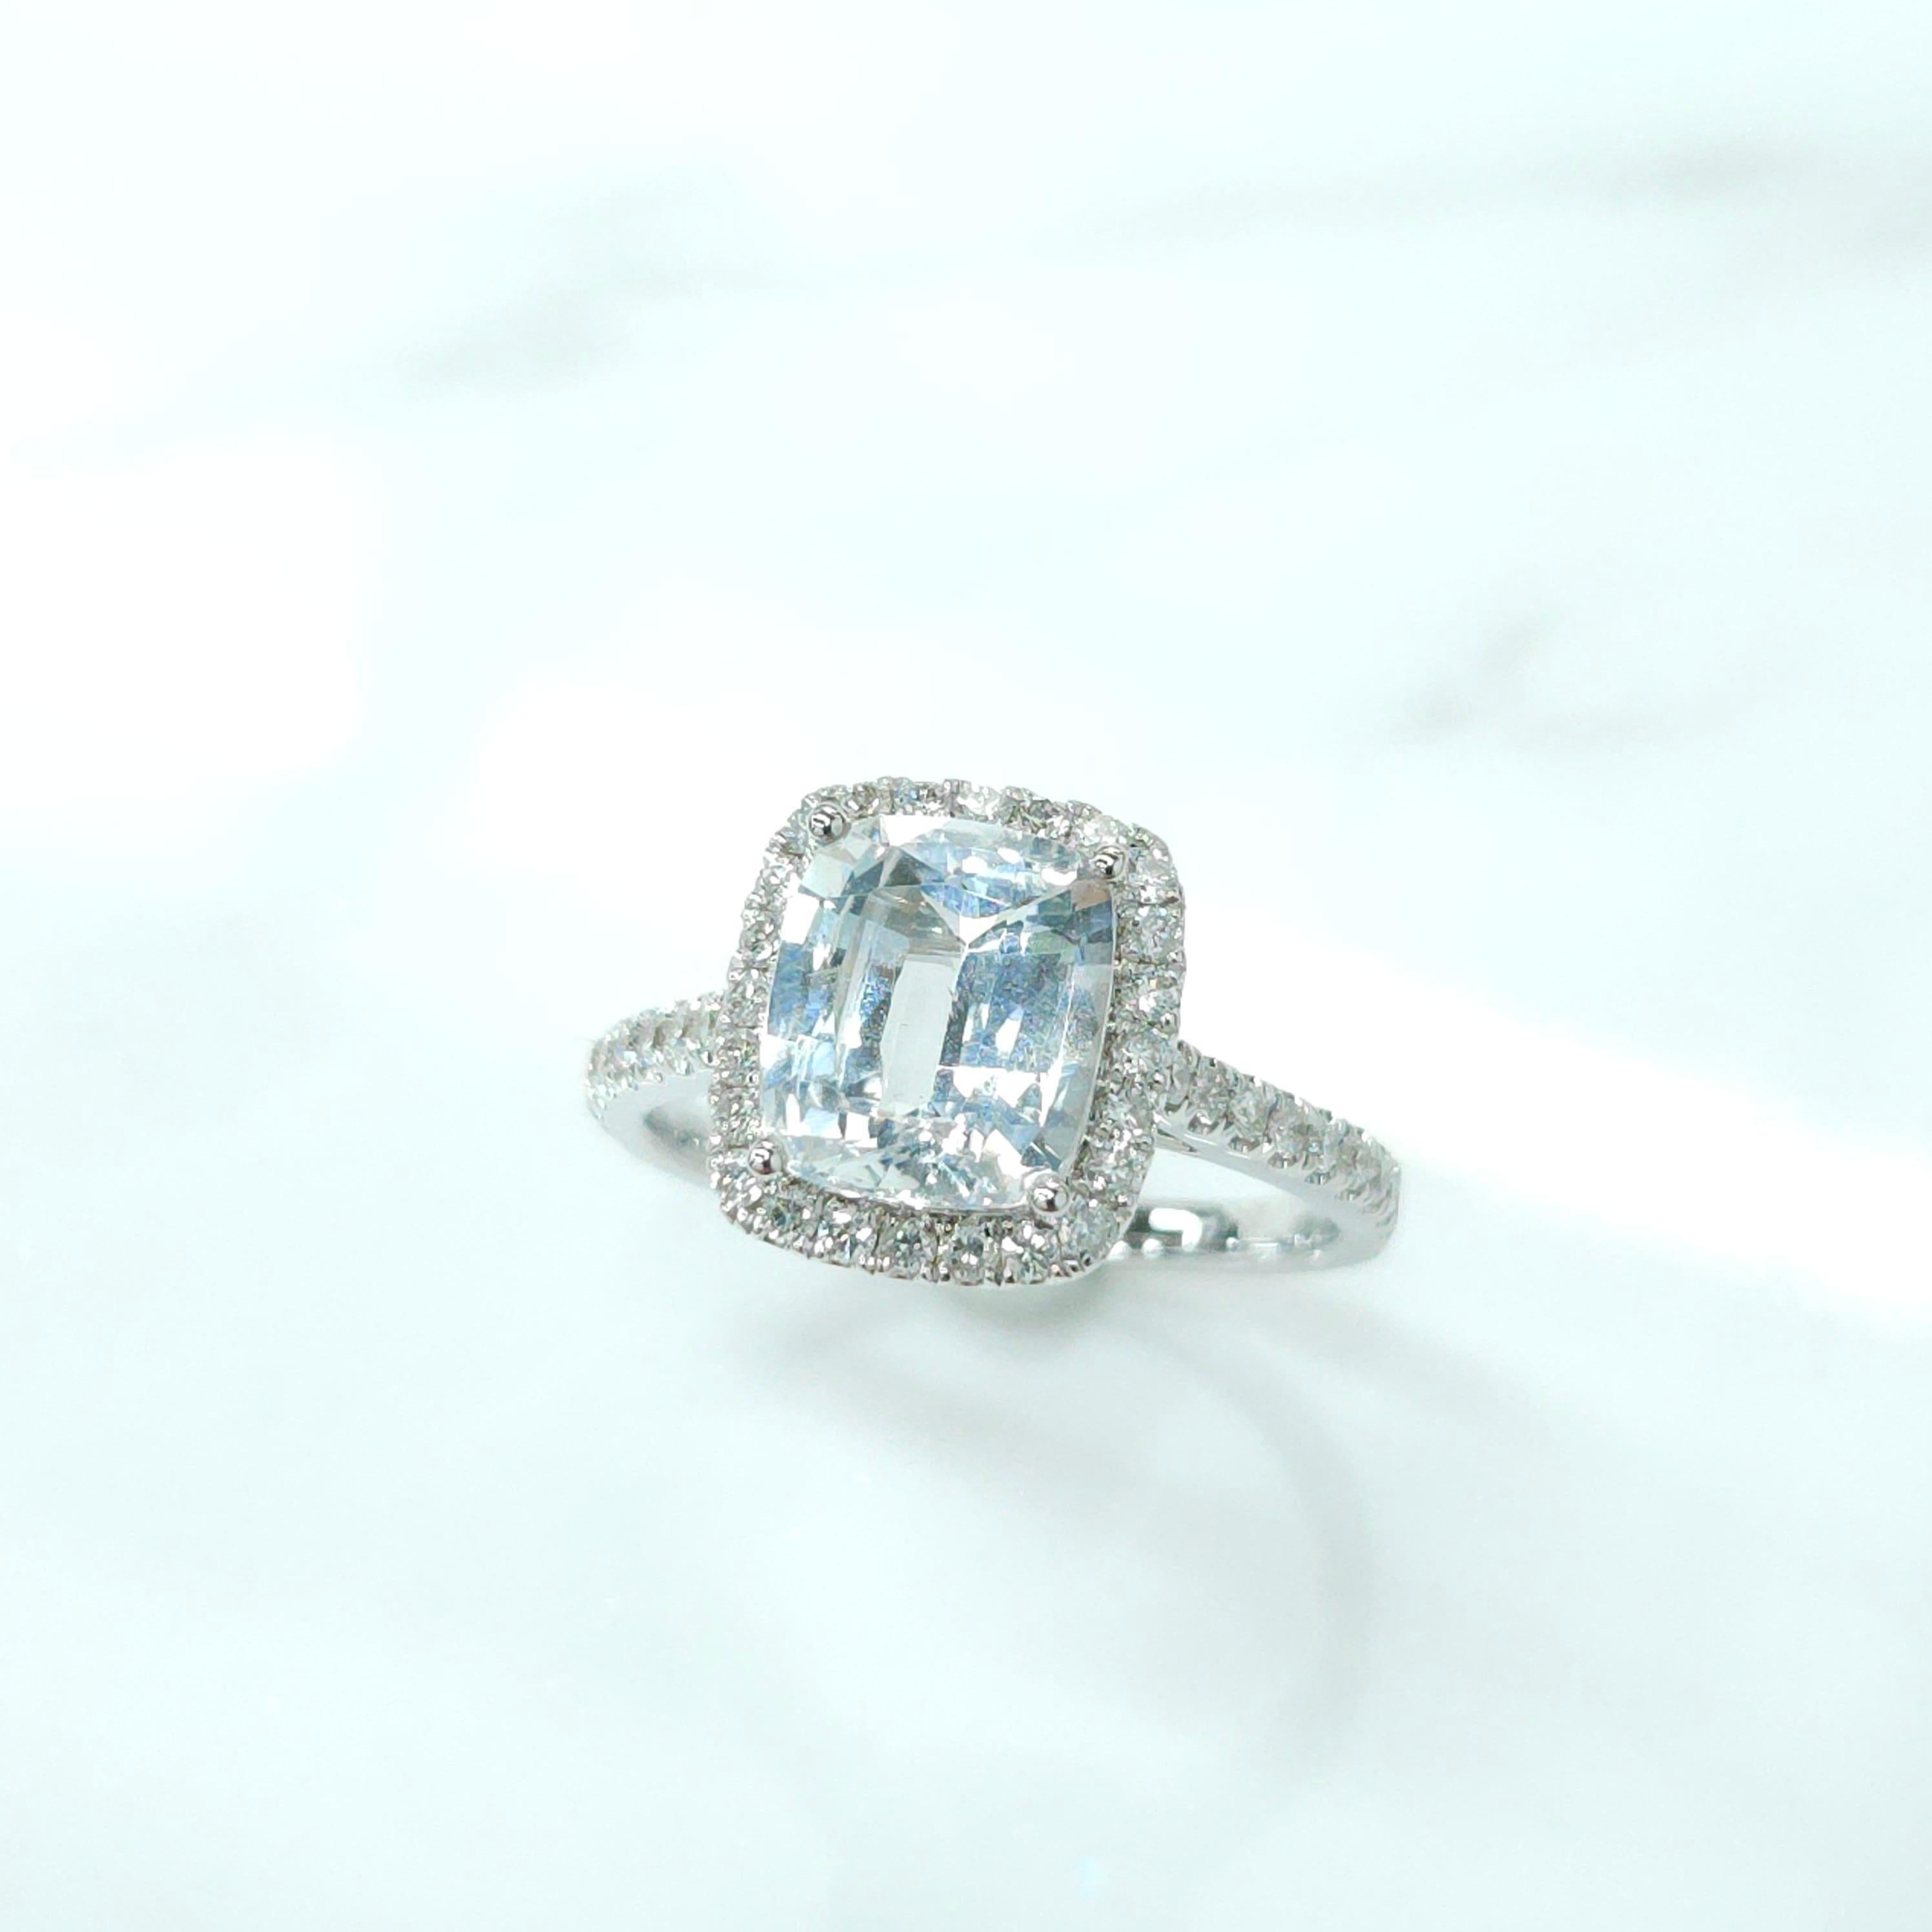 IGI Certified 2.35 Carat Unheated Sapphire & Diamond Ring in 18K WhiteGold For Sale 4